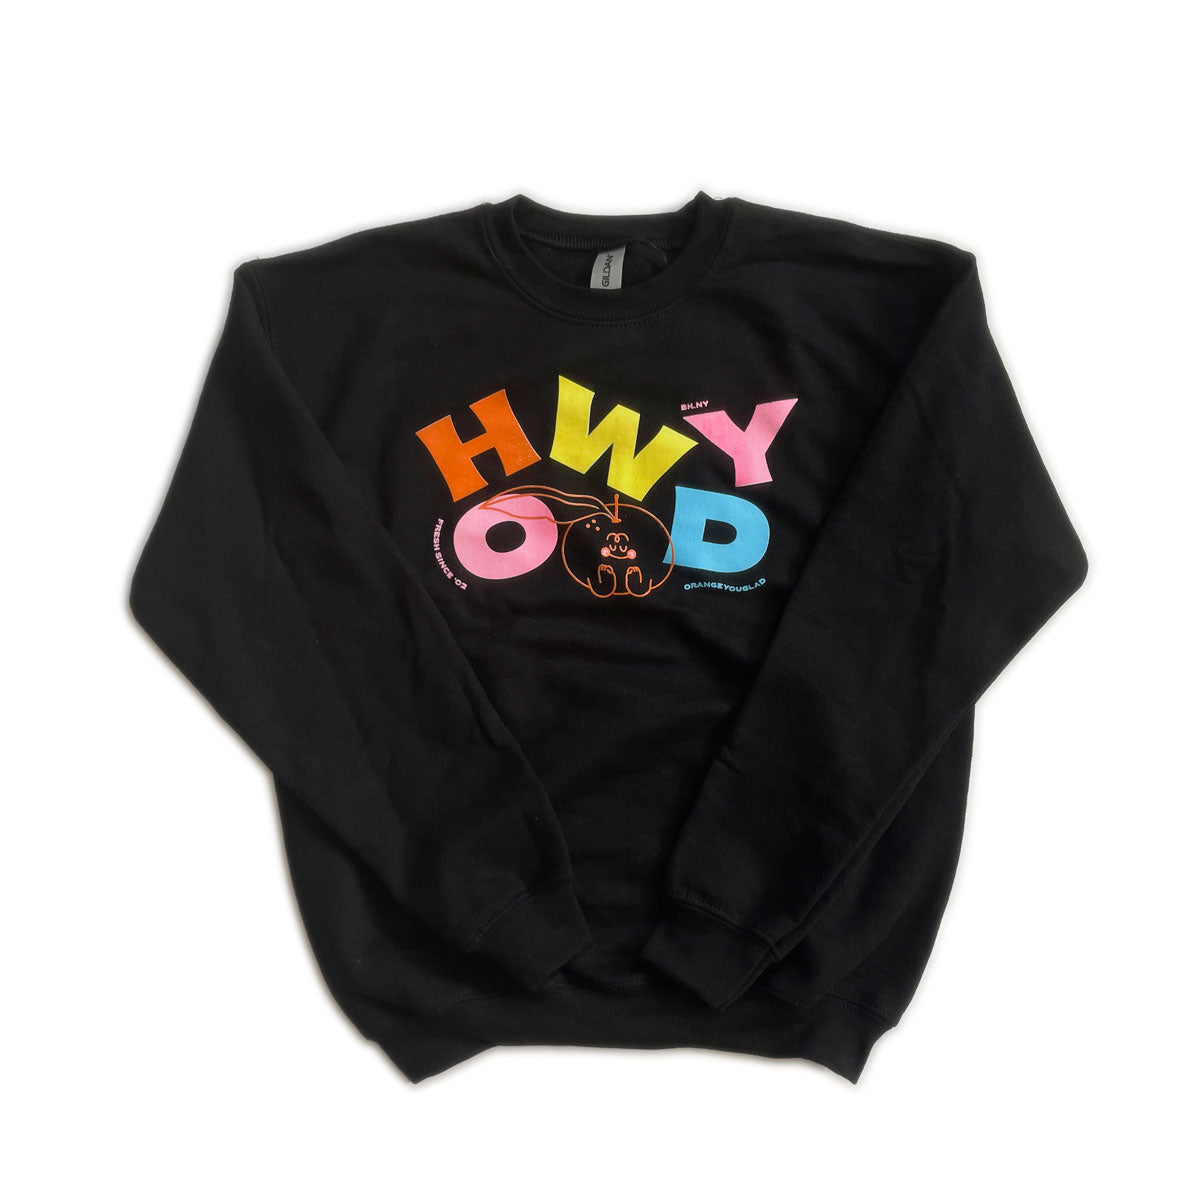 Extra Pulp: Howdy Sweatshirt (Youth)